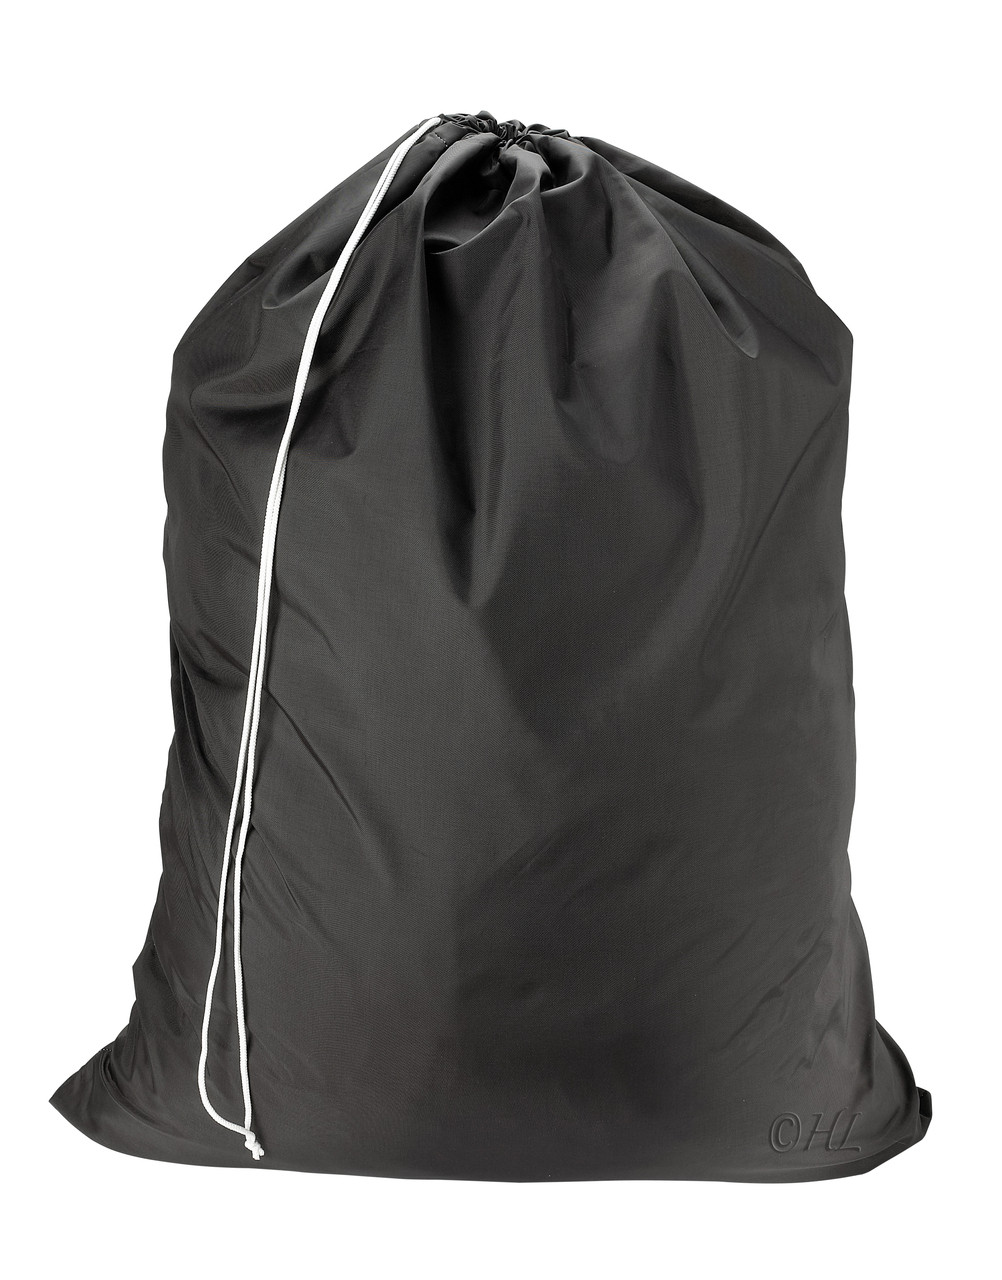 Mesh Laundry Bags Laundry Wash Bag with Drawstring Closure, Travel